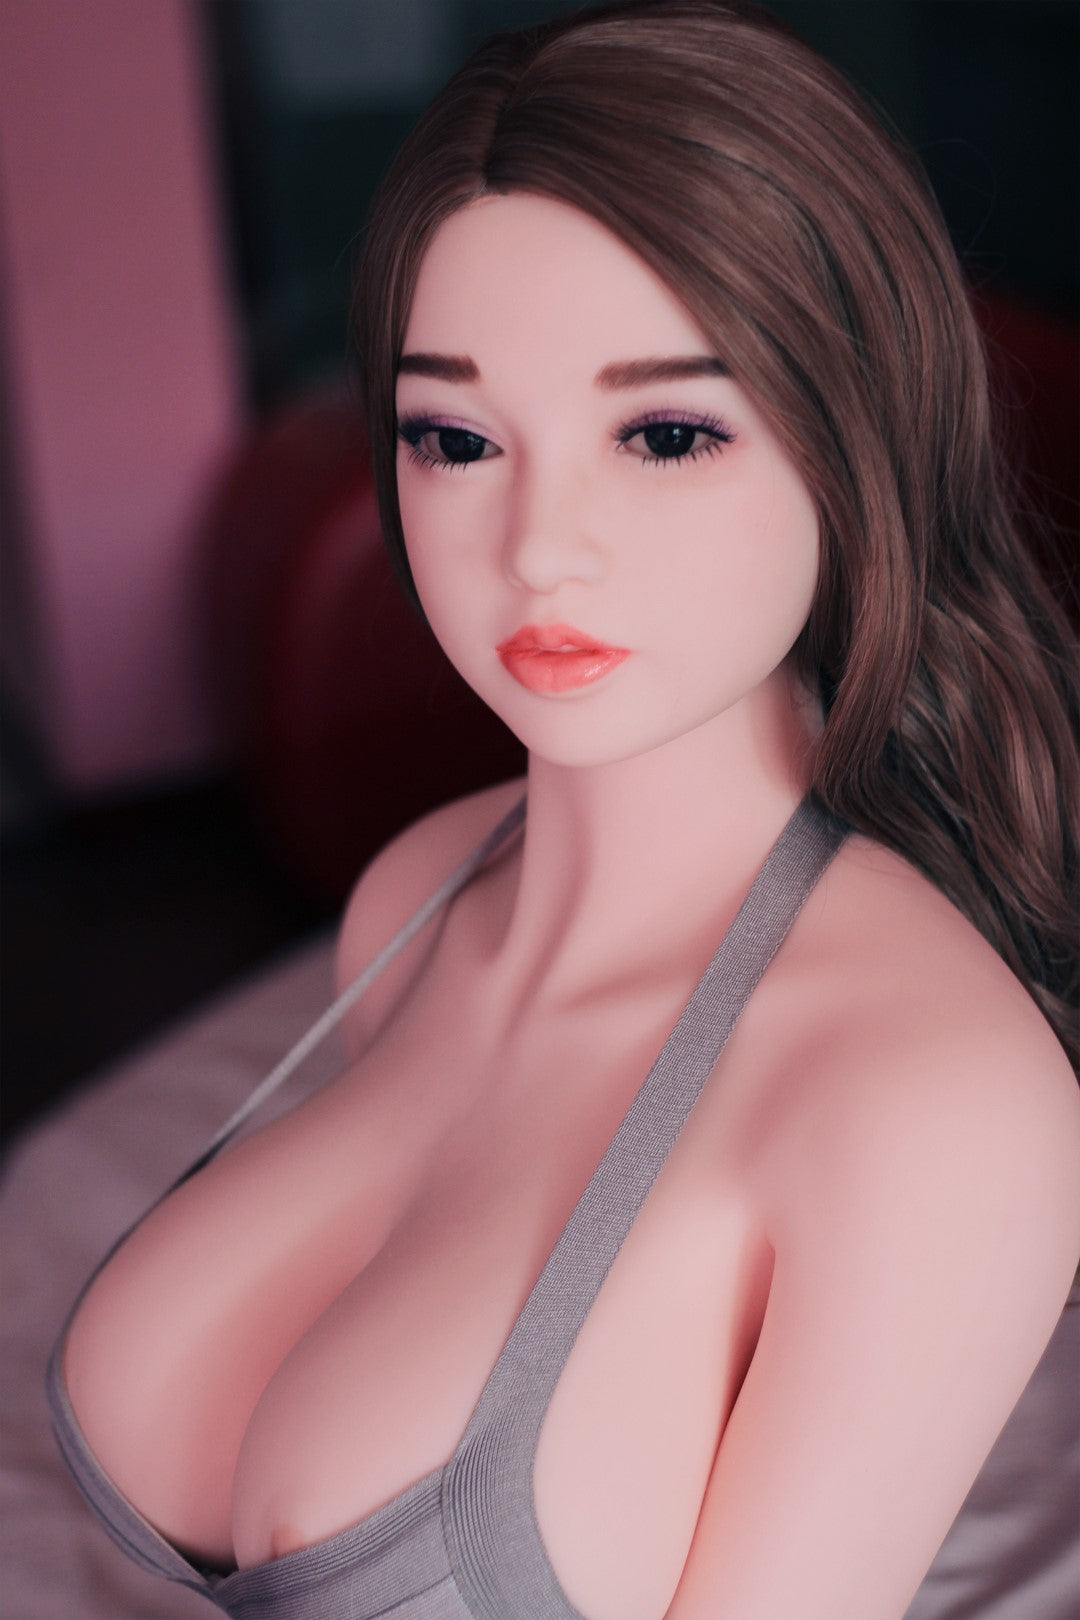 Neodoll Girlfriend Eden - Realistic Sex Doll - 158cm - Natural